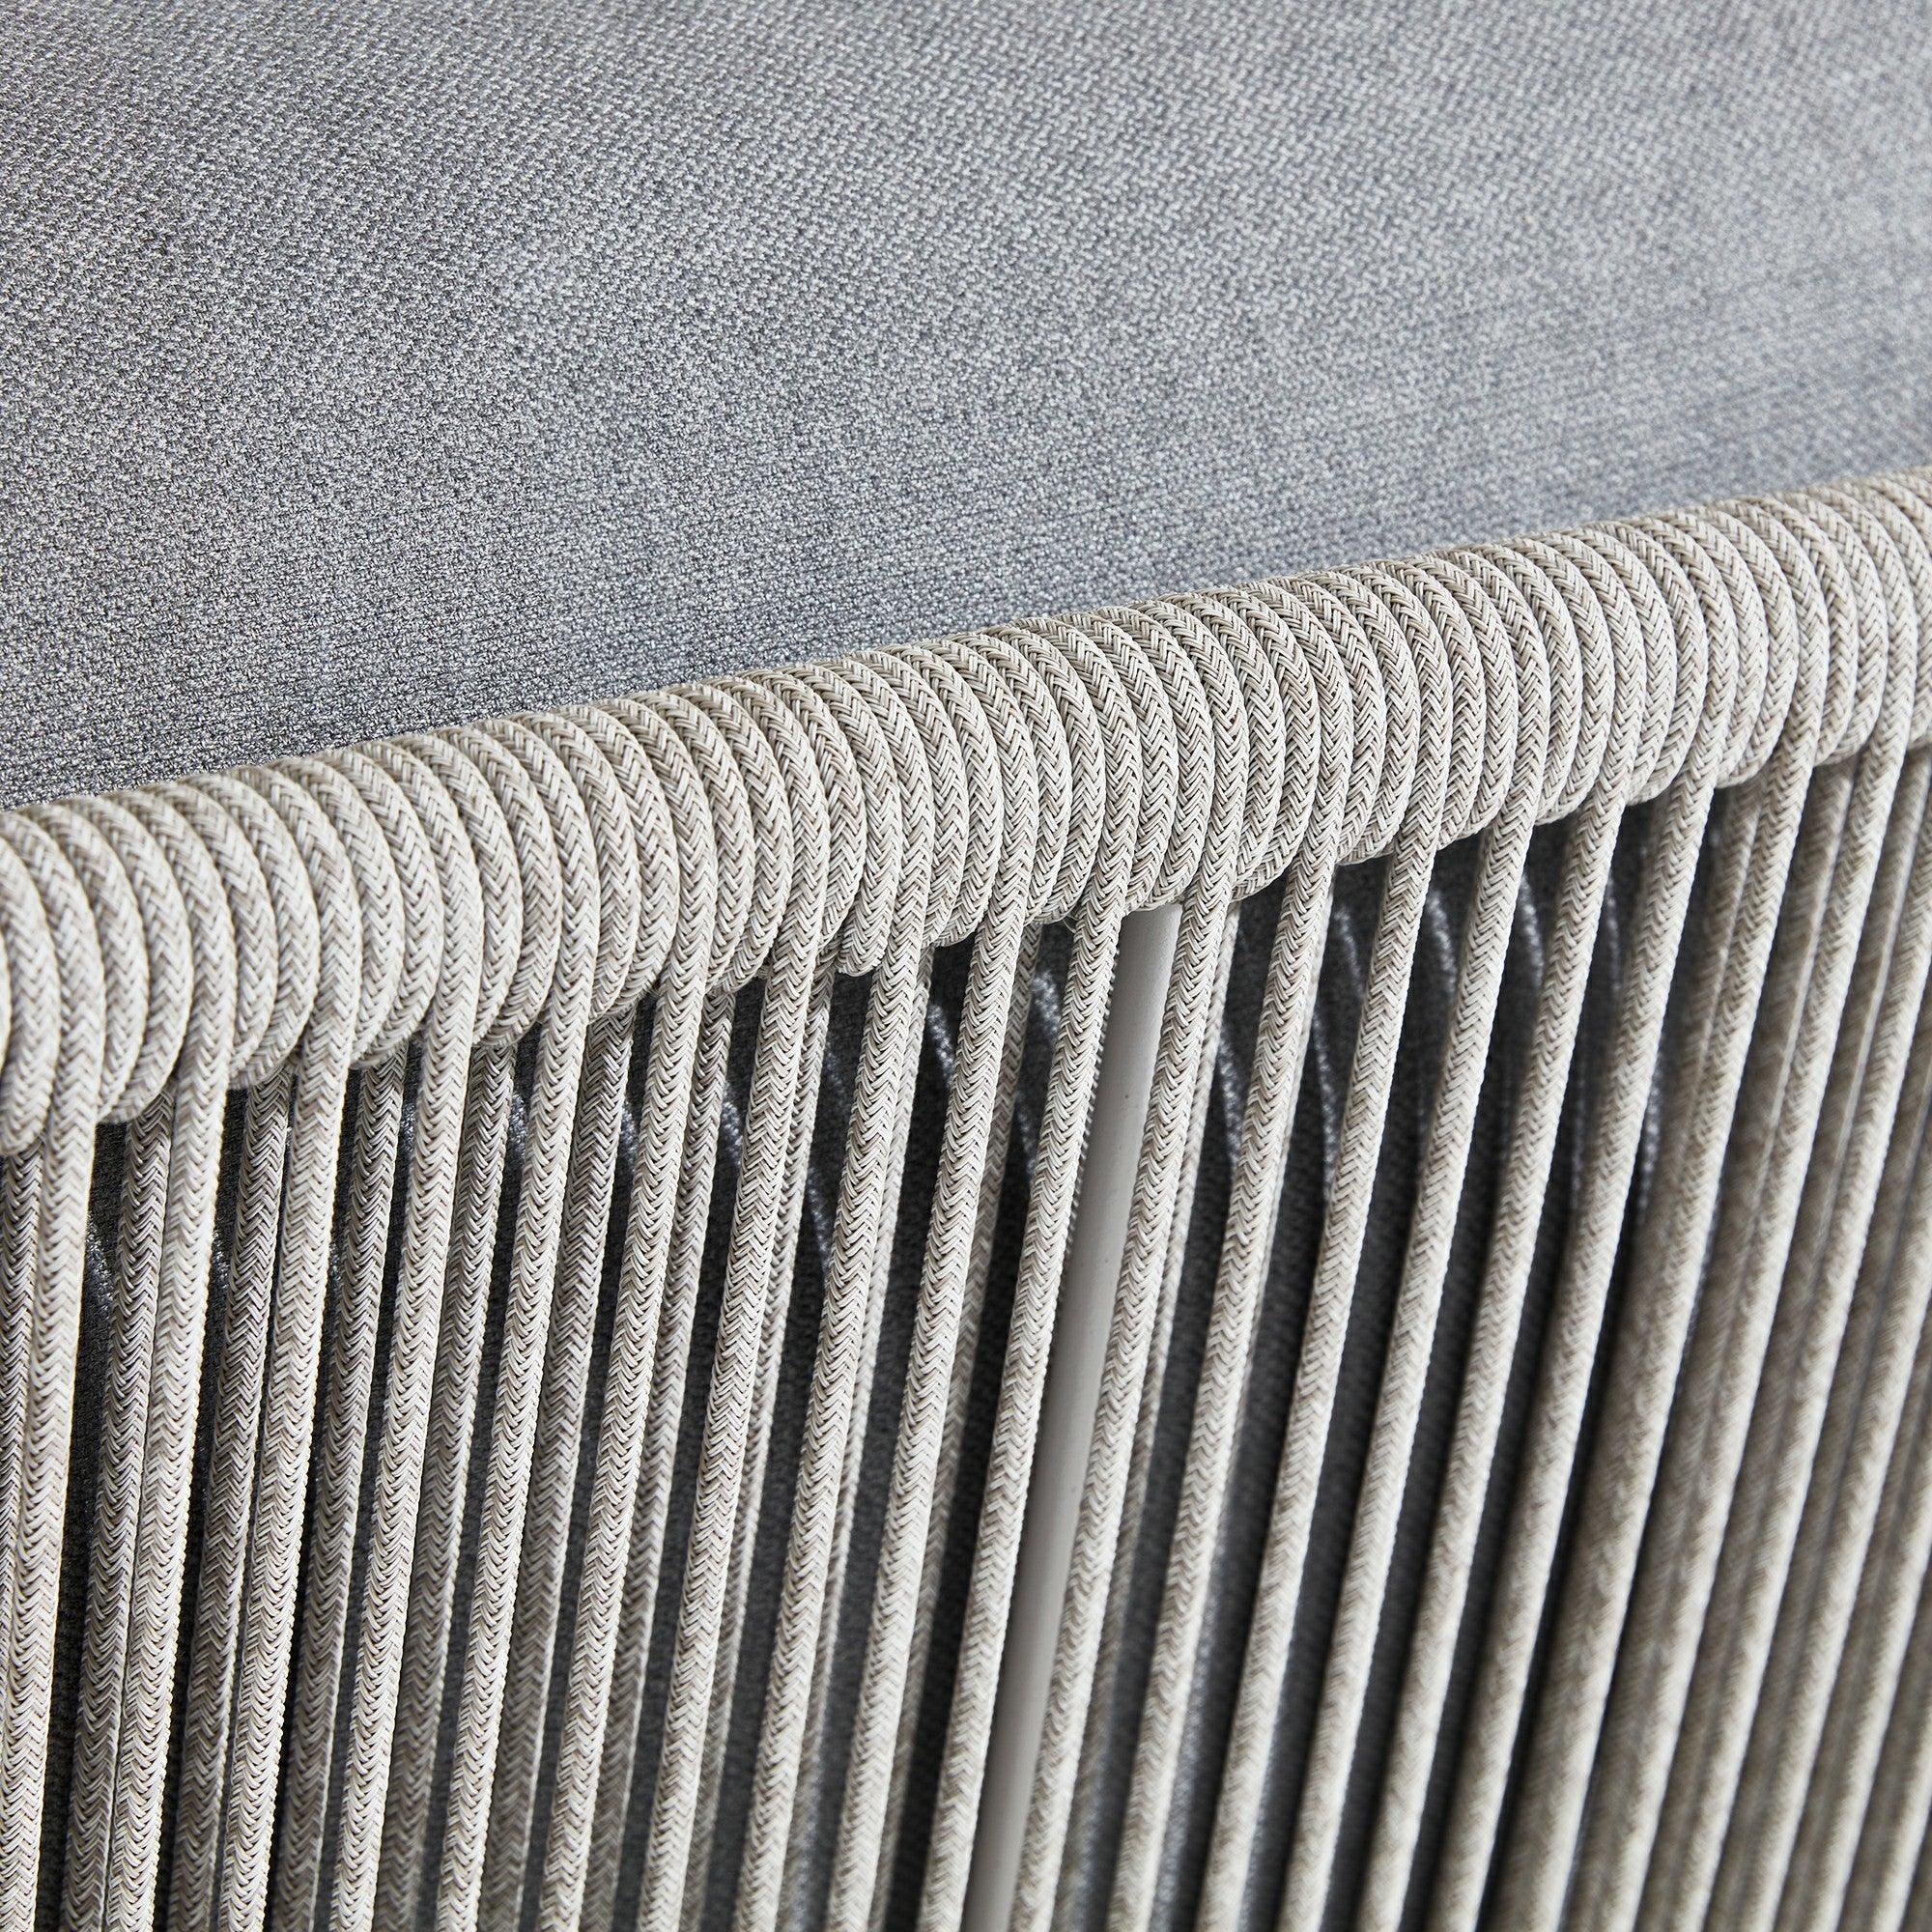 Natural- loveseat, high-quality grey finish, water-resistant Textilene rope detailed Photo- Sunsitt Signature